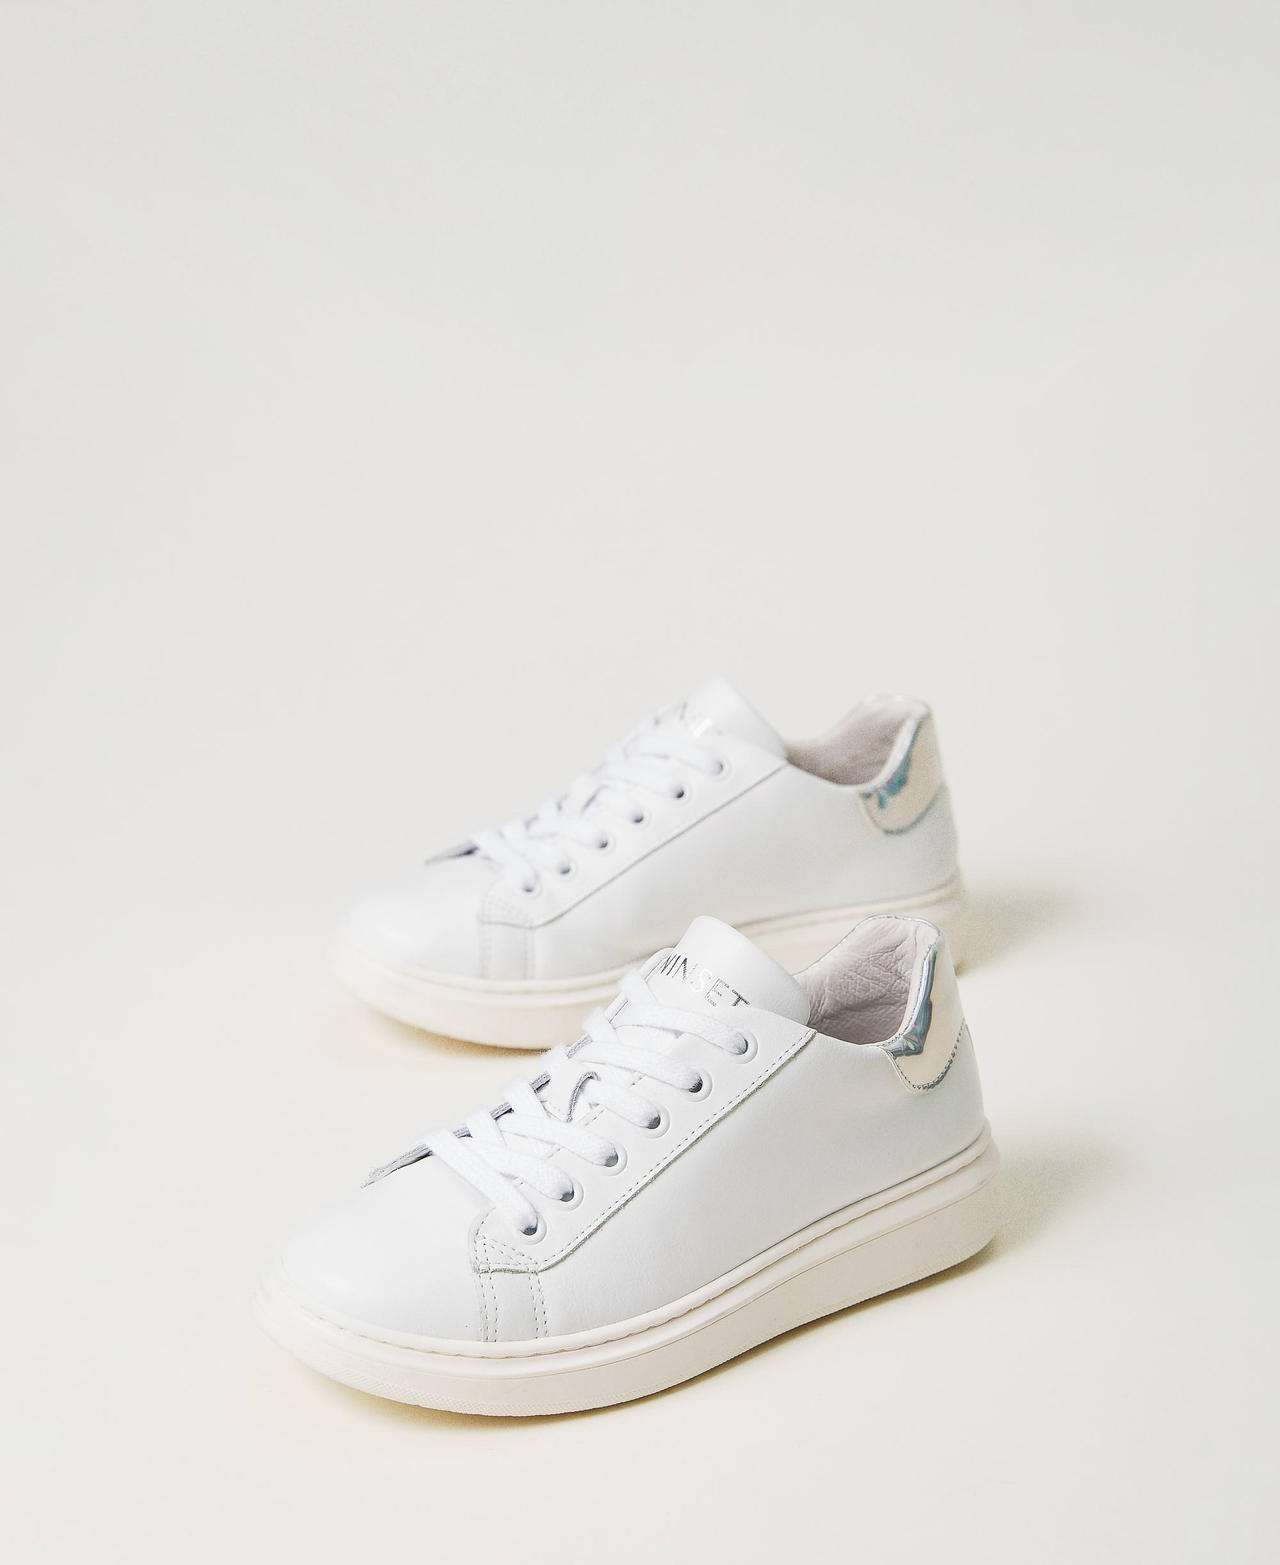 Sneakers de piel con detalle iridiscente Bicolor Blanco "Lucent White" / Iridiscente Niña 241GCJ124-02